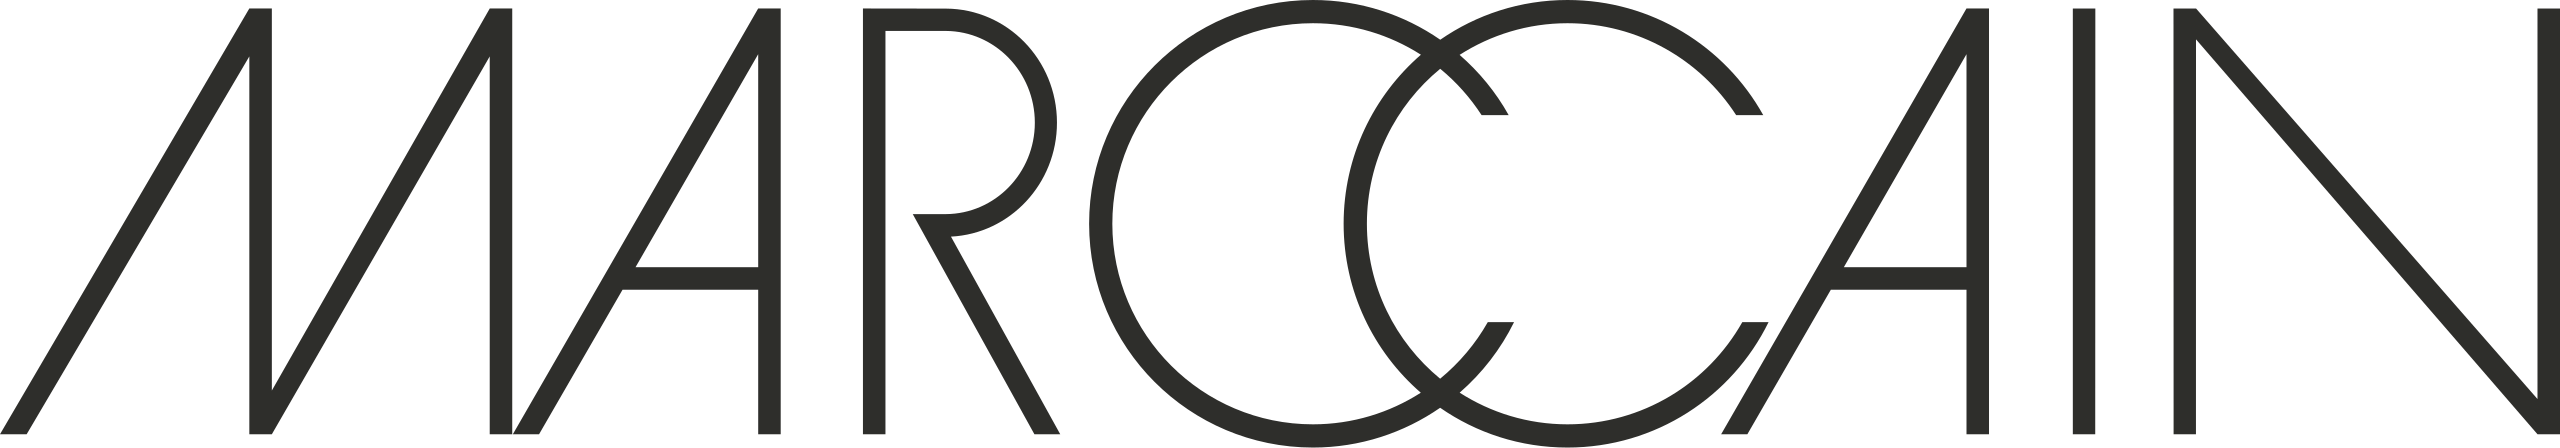 Marc_Cain_Logo_2020.svg